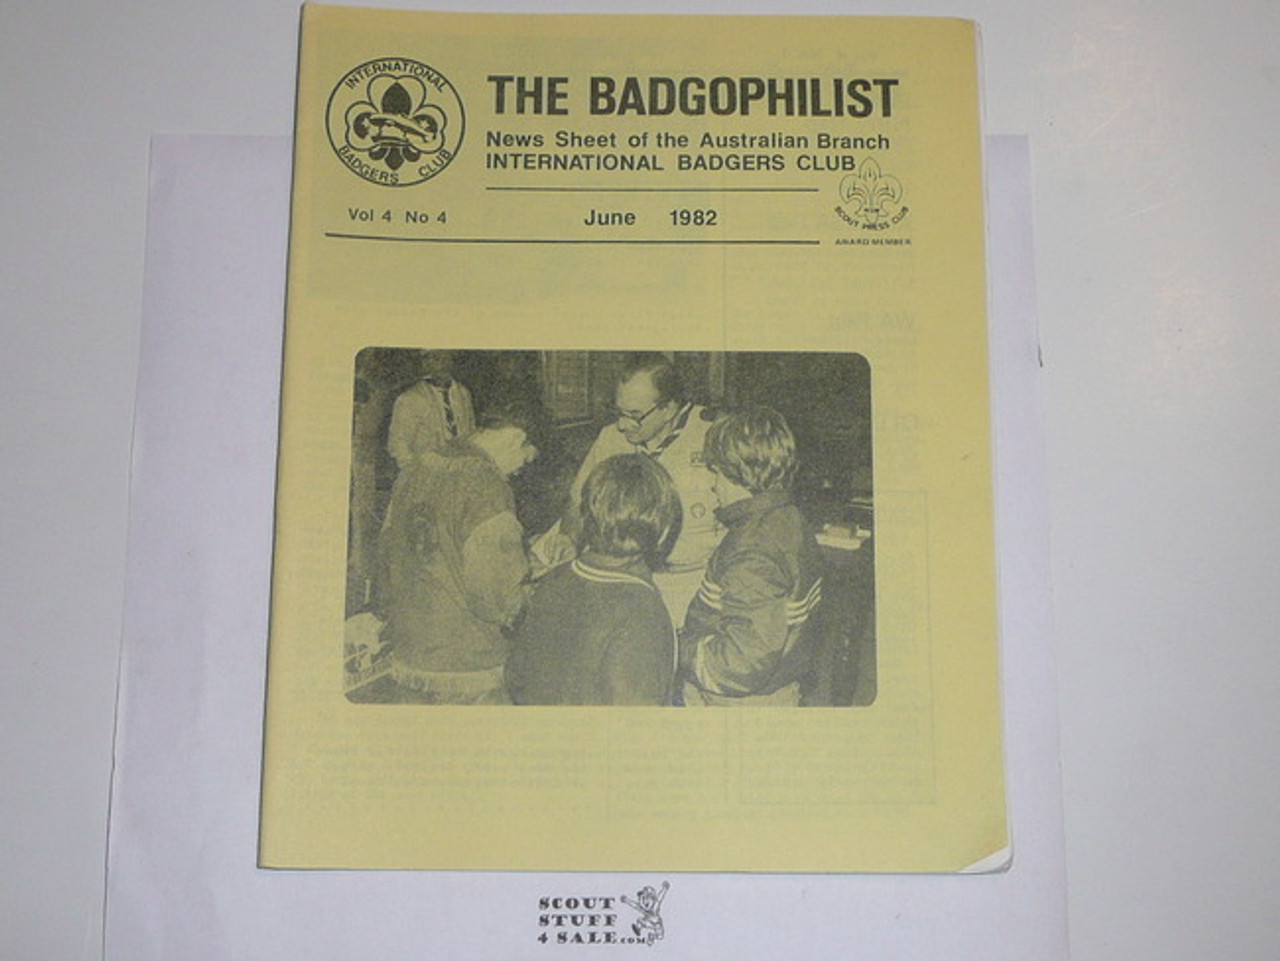 The Badgophilist, Newsletter of the Australian Branch of the International Badger clubb, 1982 June, Vol 4 #4